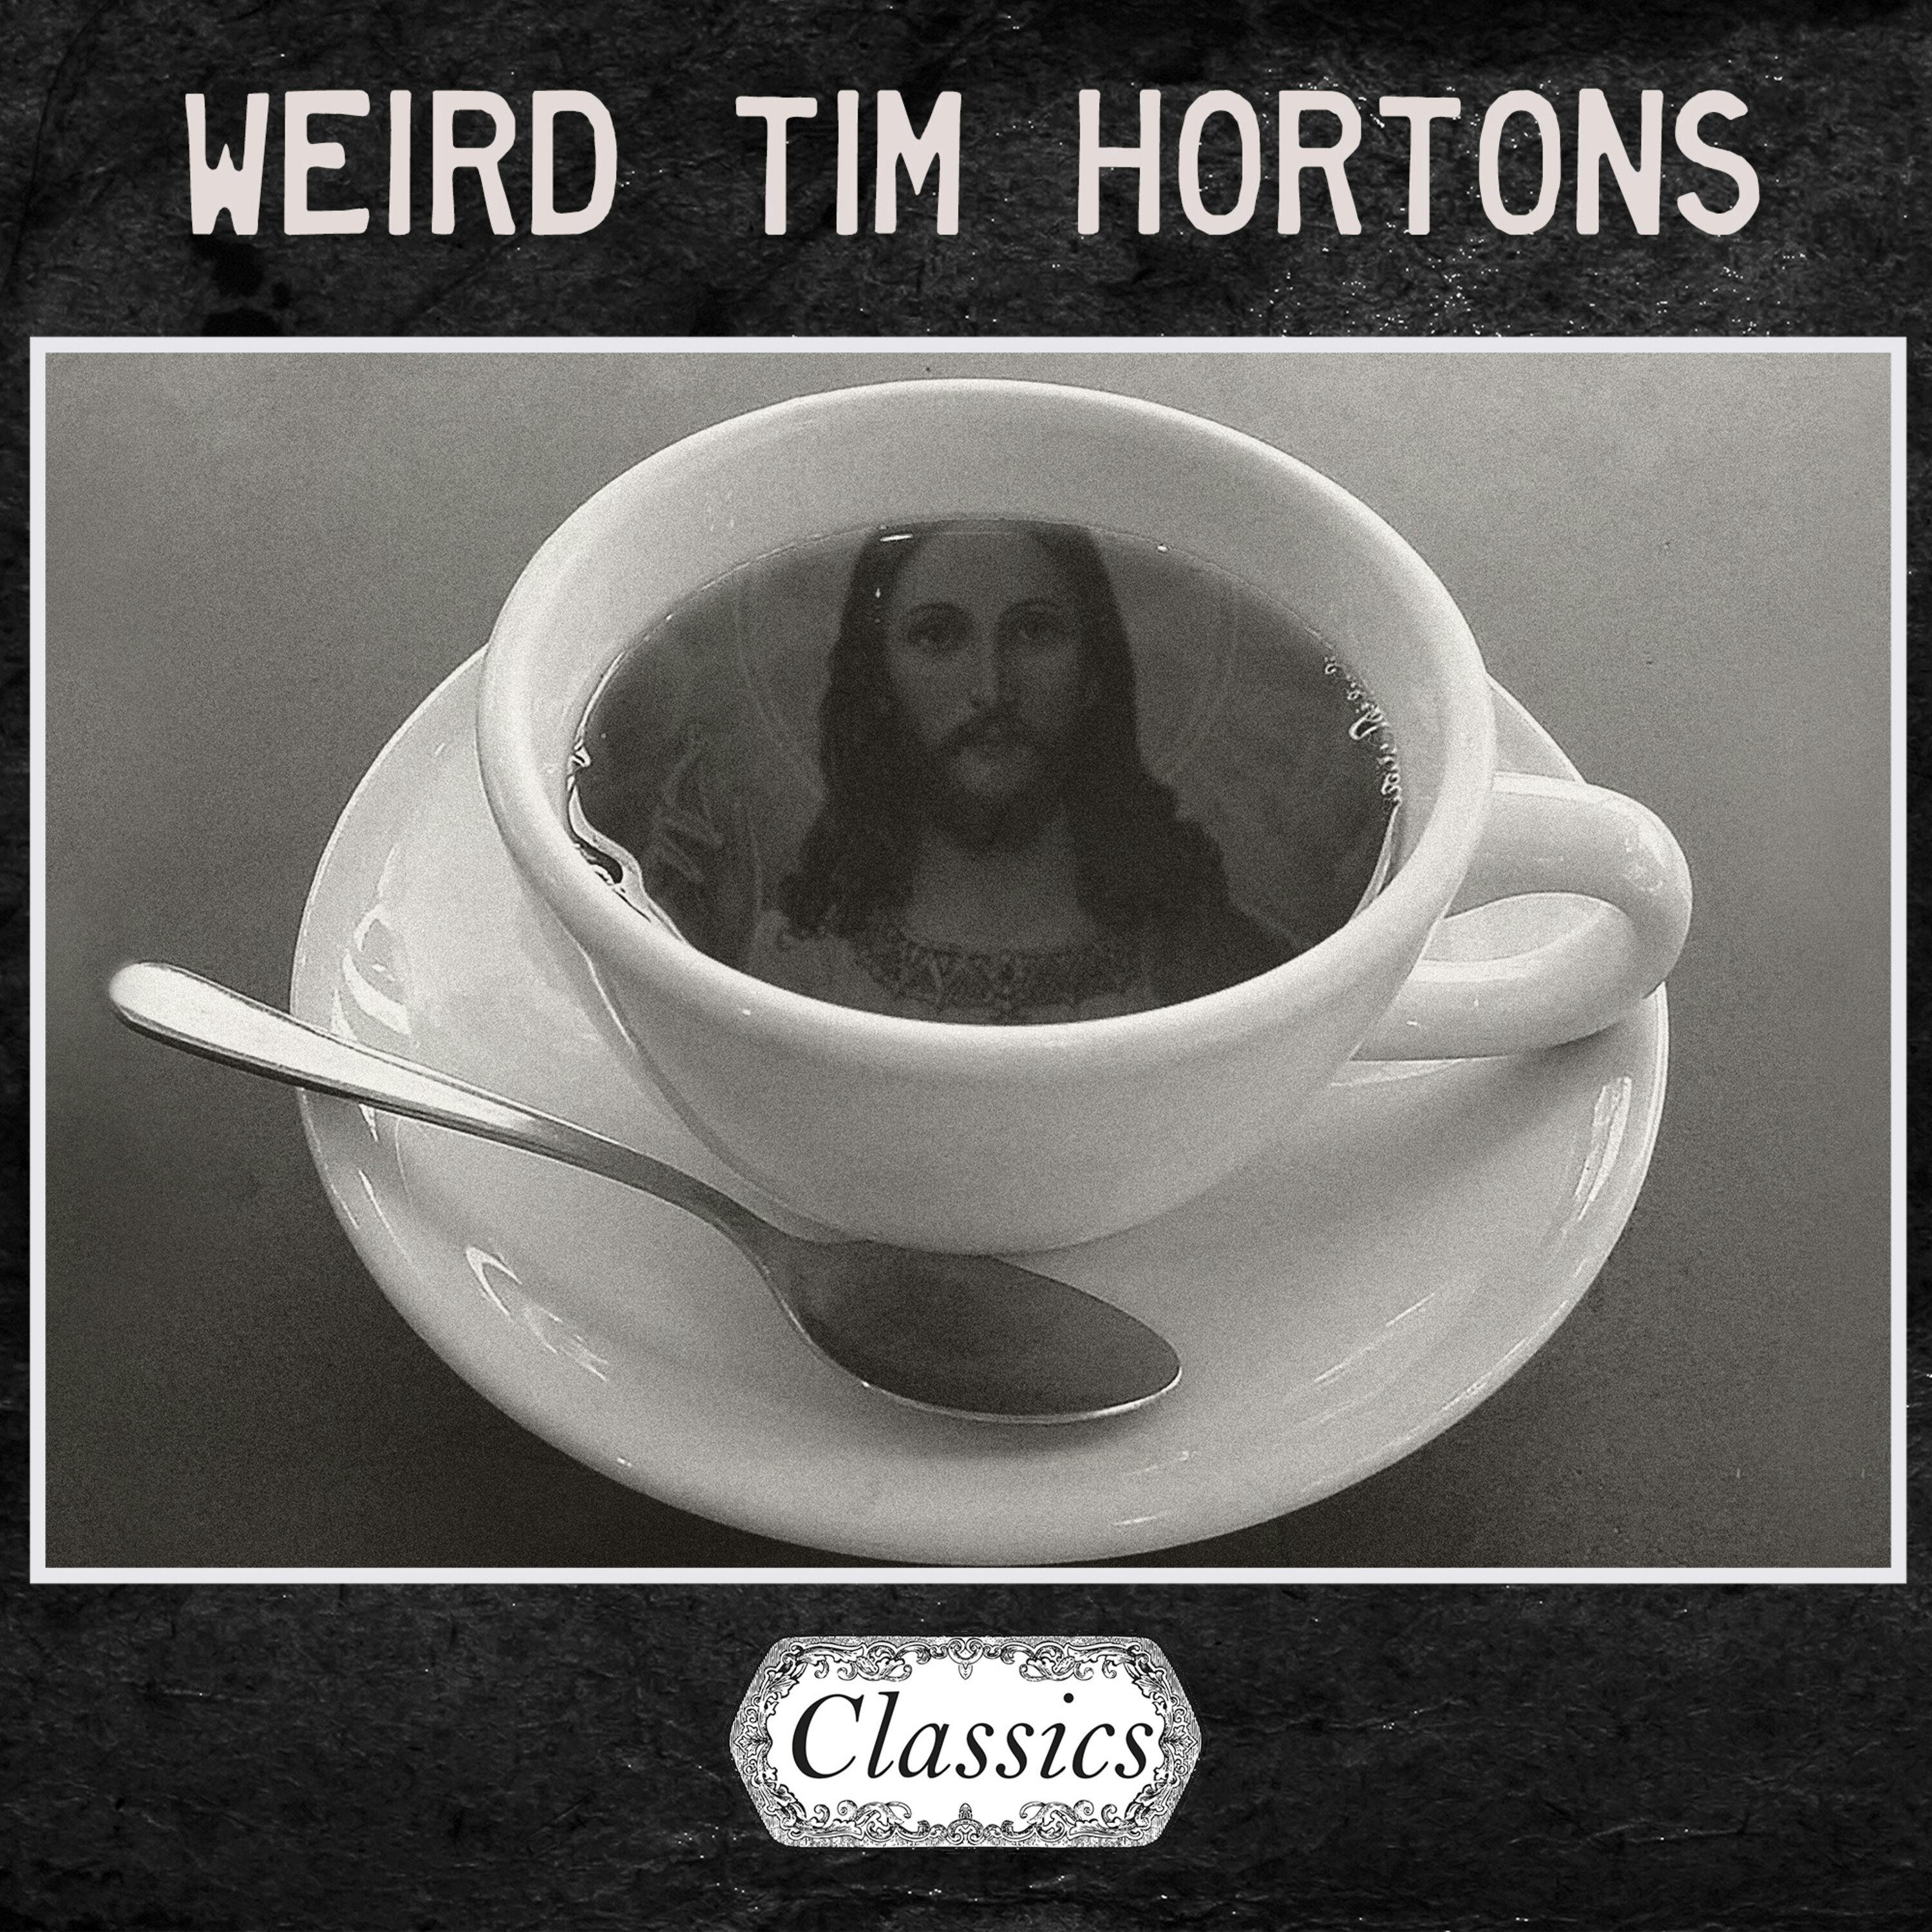 Weird Tim Hortons - Nighttime Classic ** Free Premium Content Sampler **